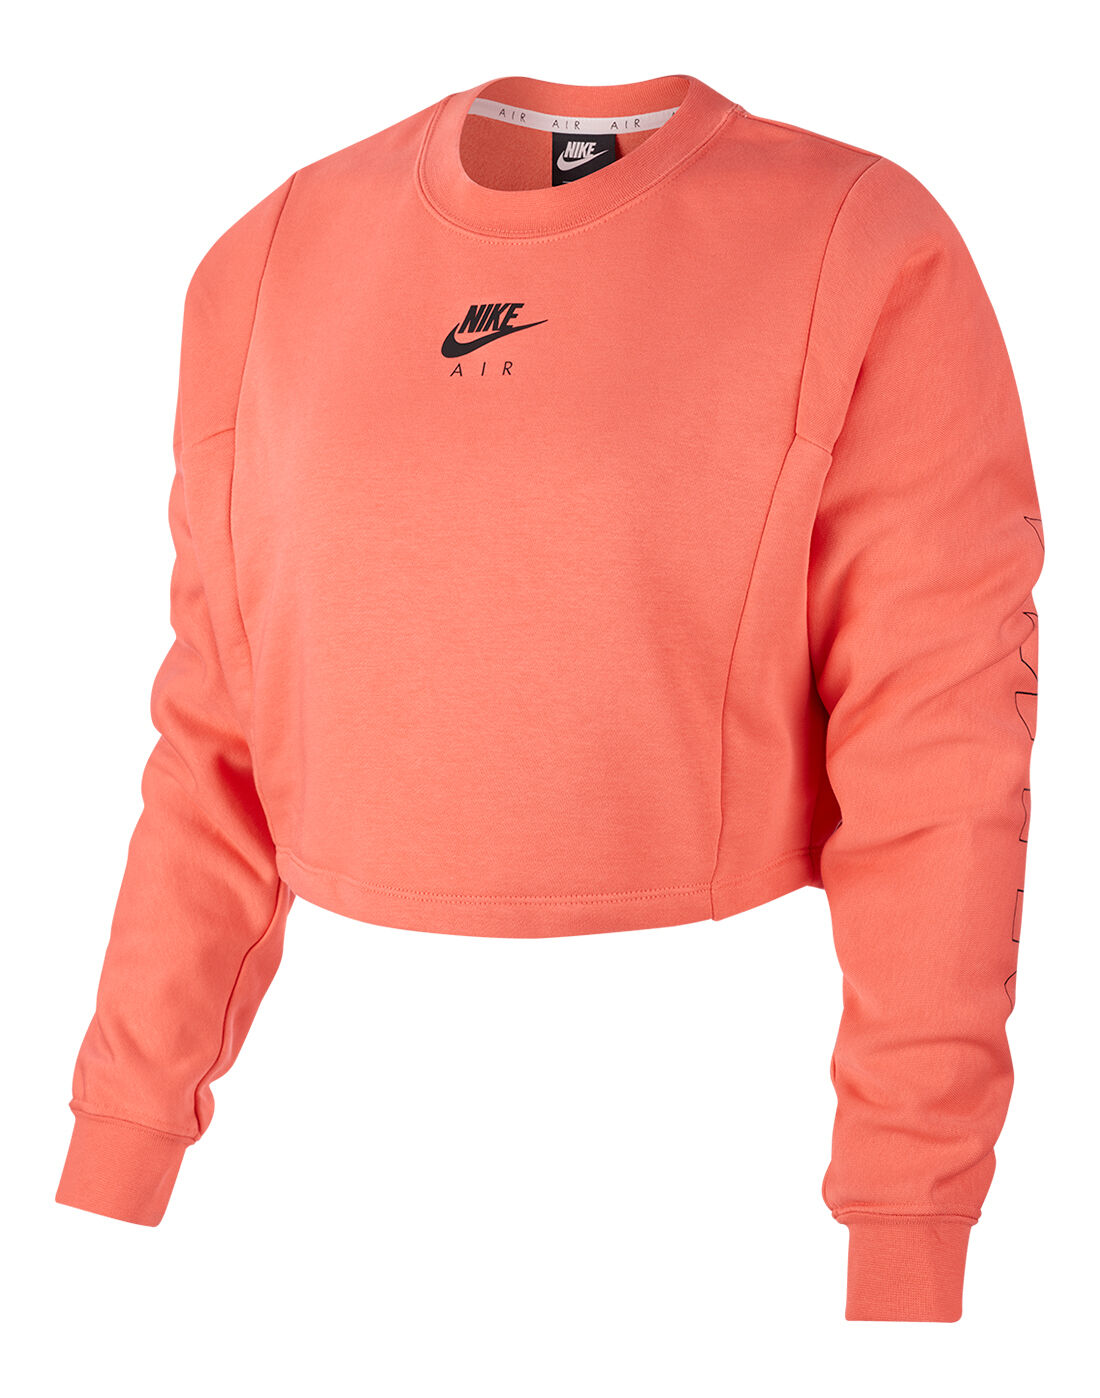 Nike Womens Air Crew Sweatshirt 